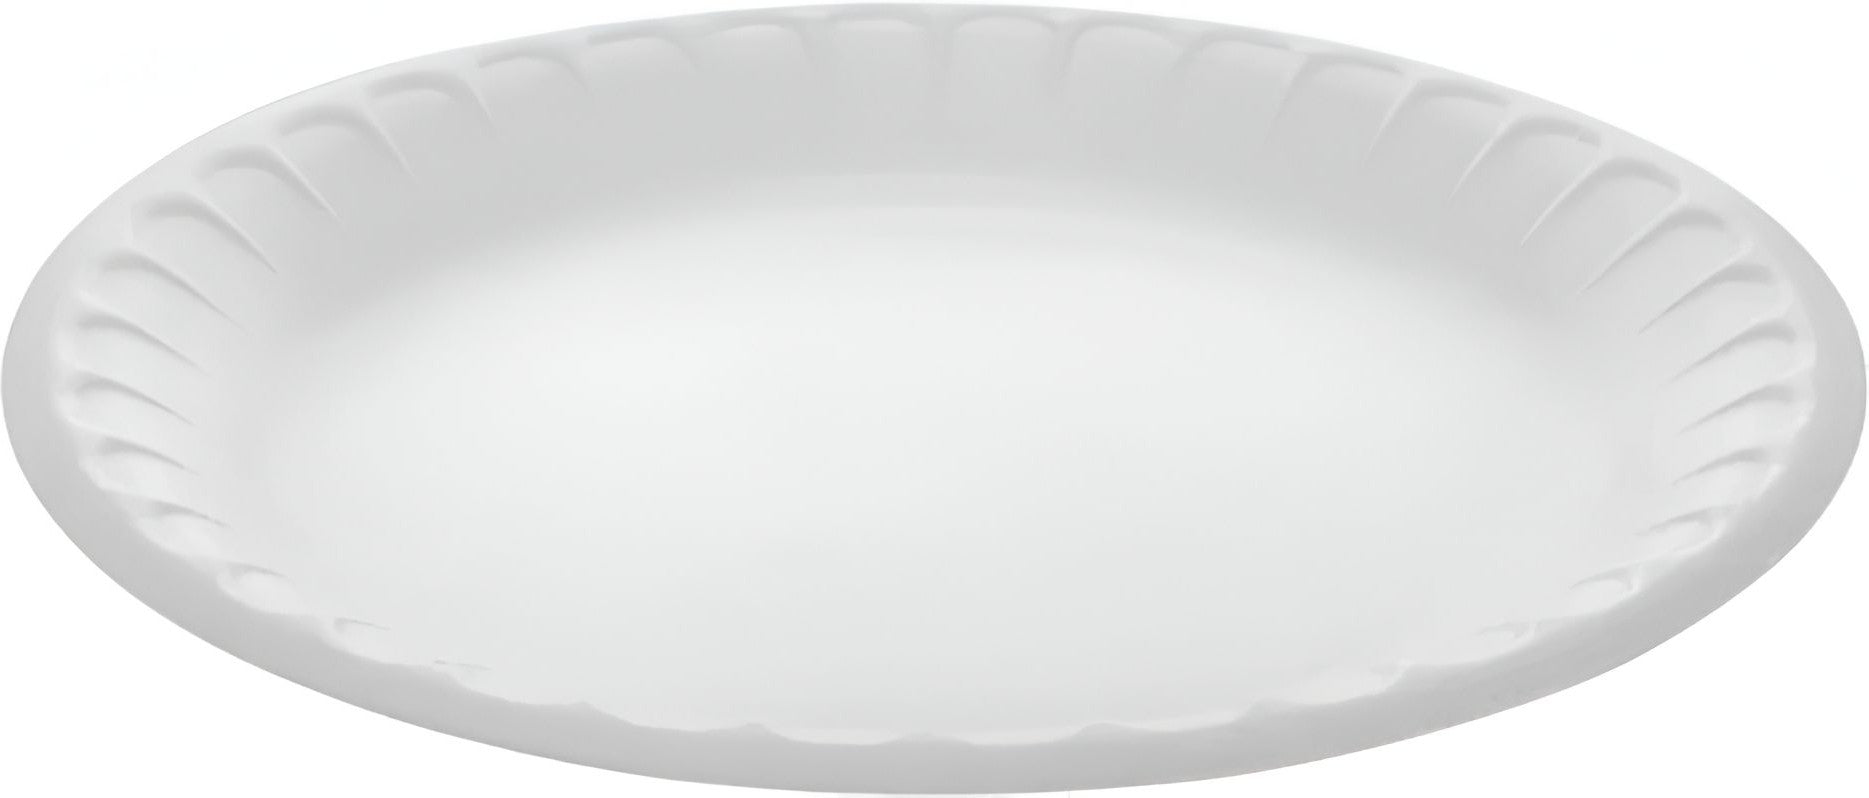 Pactiv Evergreen - 9" Round Non-Laminated Foam Plate, 500/Cs - 0TH100090000